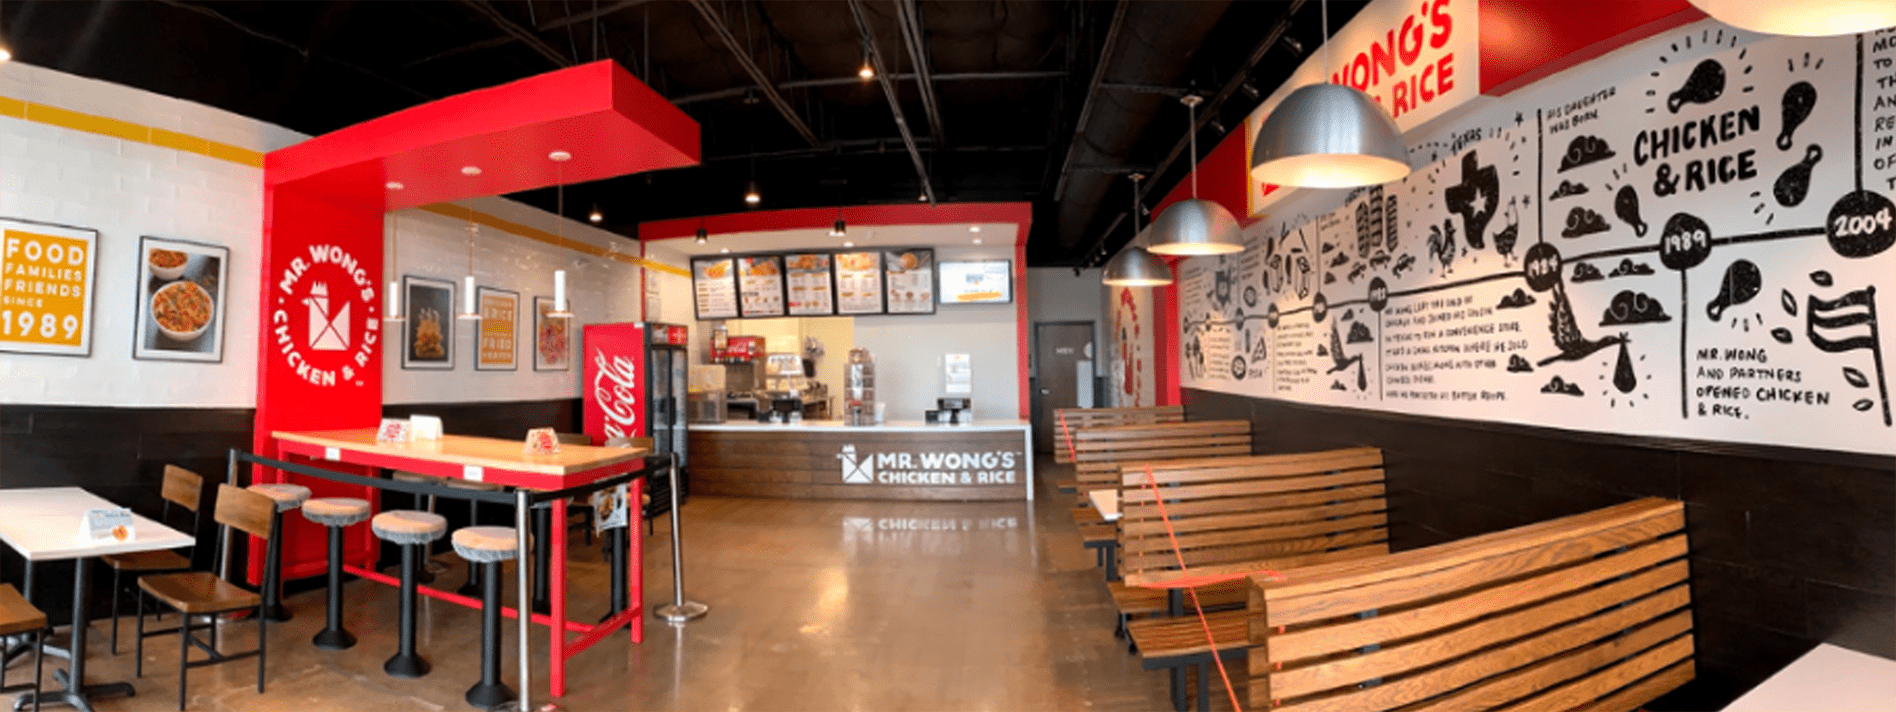 Mr. Wong's Chicken and Rice - restaurant branding interior